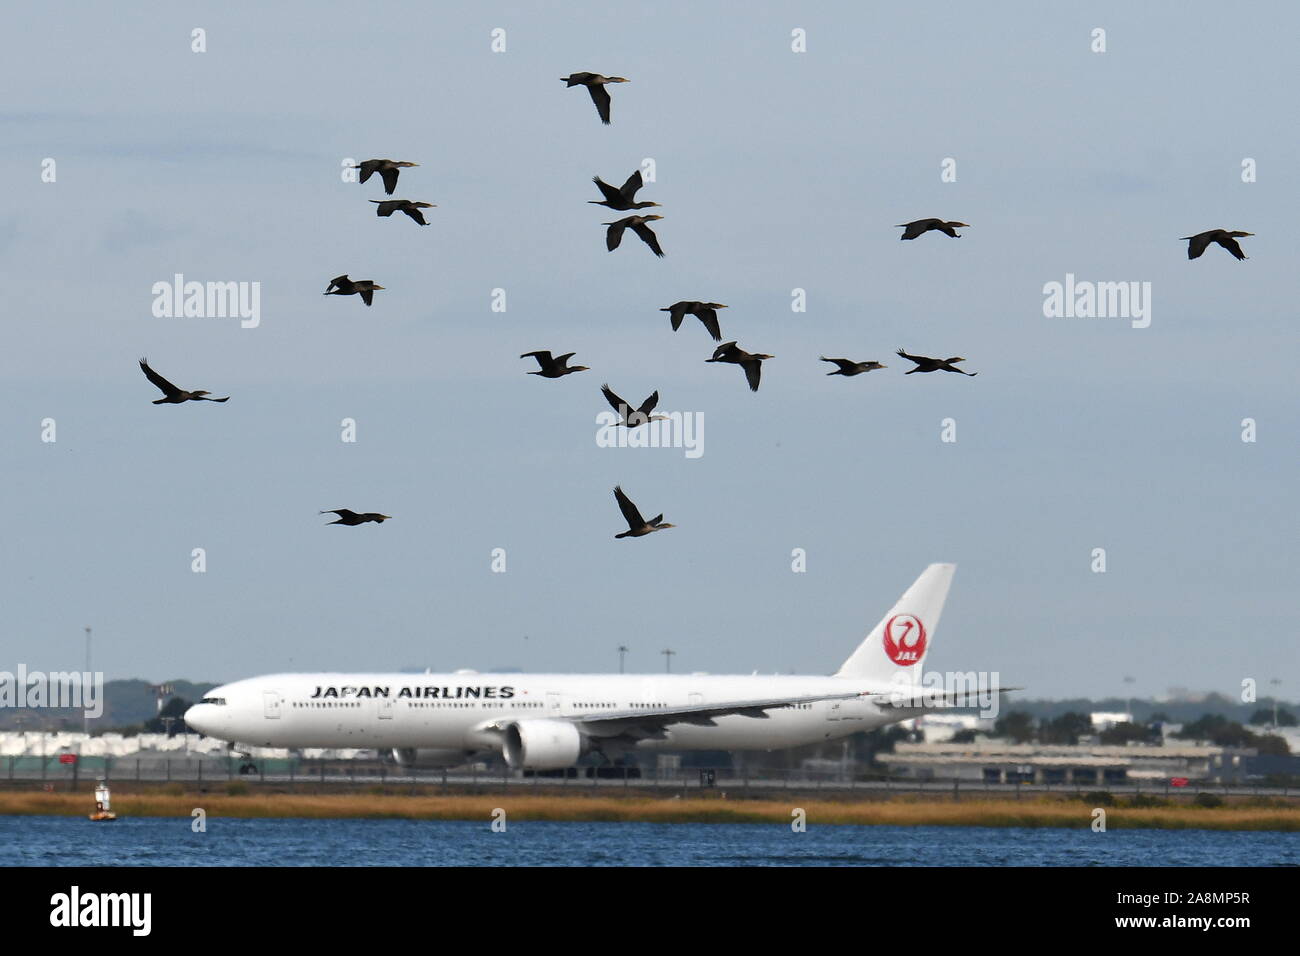 BIRD STRIKE DANGER - GEESE NEAR AIRPORTS. Stock Photo